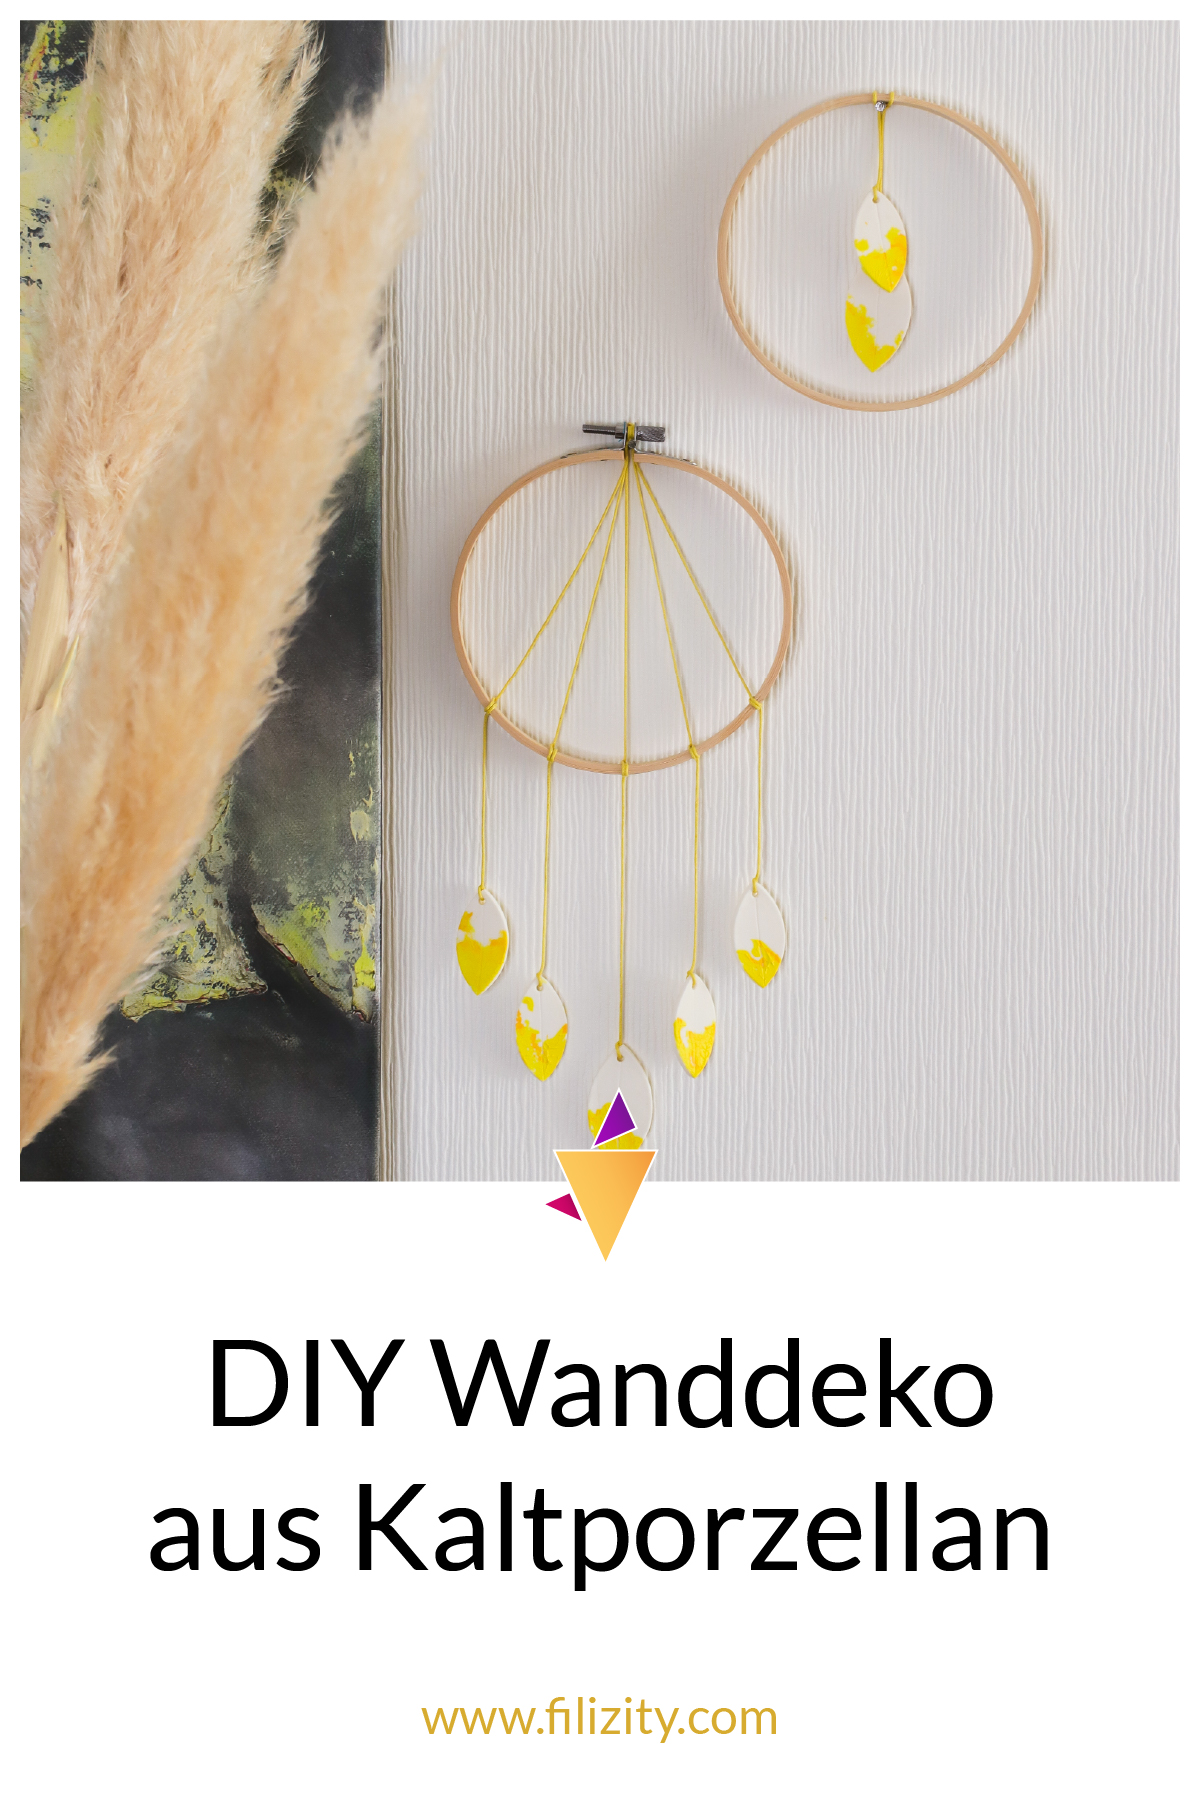 DIY Wanddeko: Blätter-Mobile aus Kaltporzellan selber machen | Filizity. Kreativmagazin & DIY-Blog #kaltporzellan #wanddeko #minimalistisch